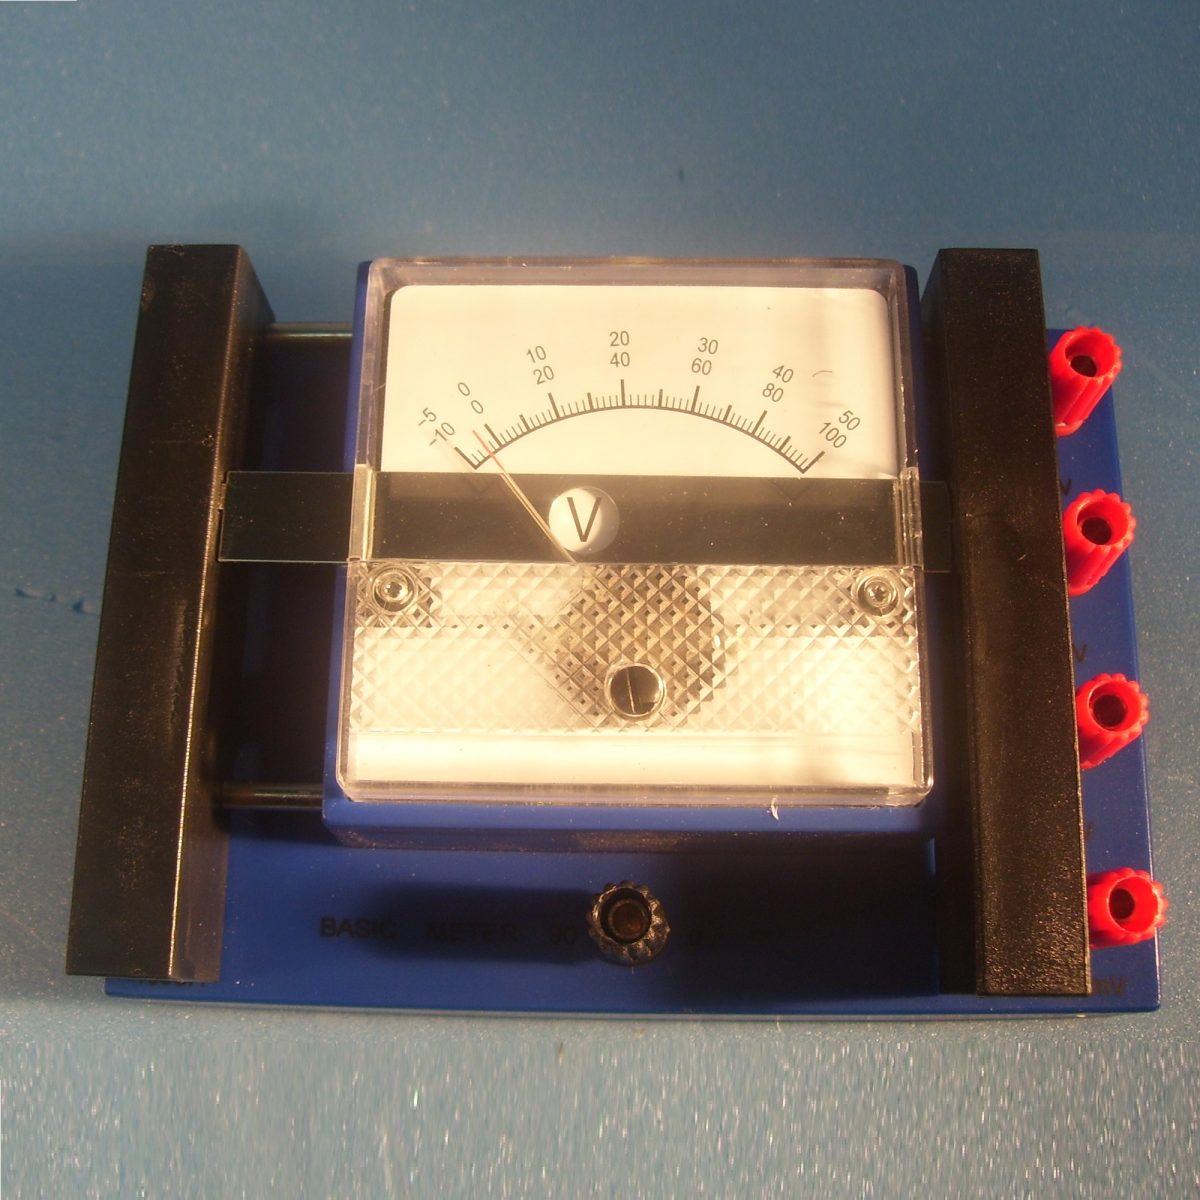 Analog Ammeter Voltometer - Διερευνητική Μάθηση